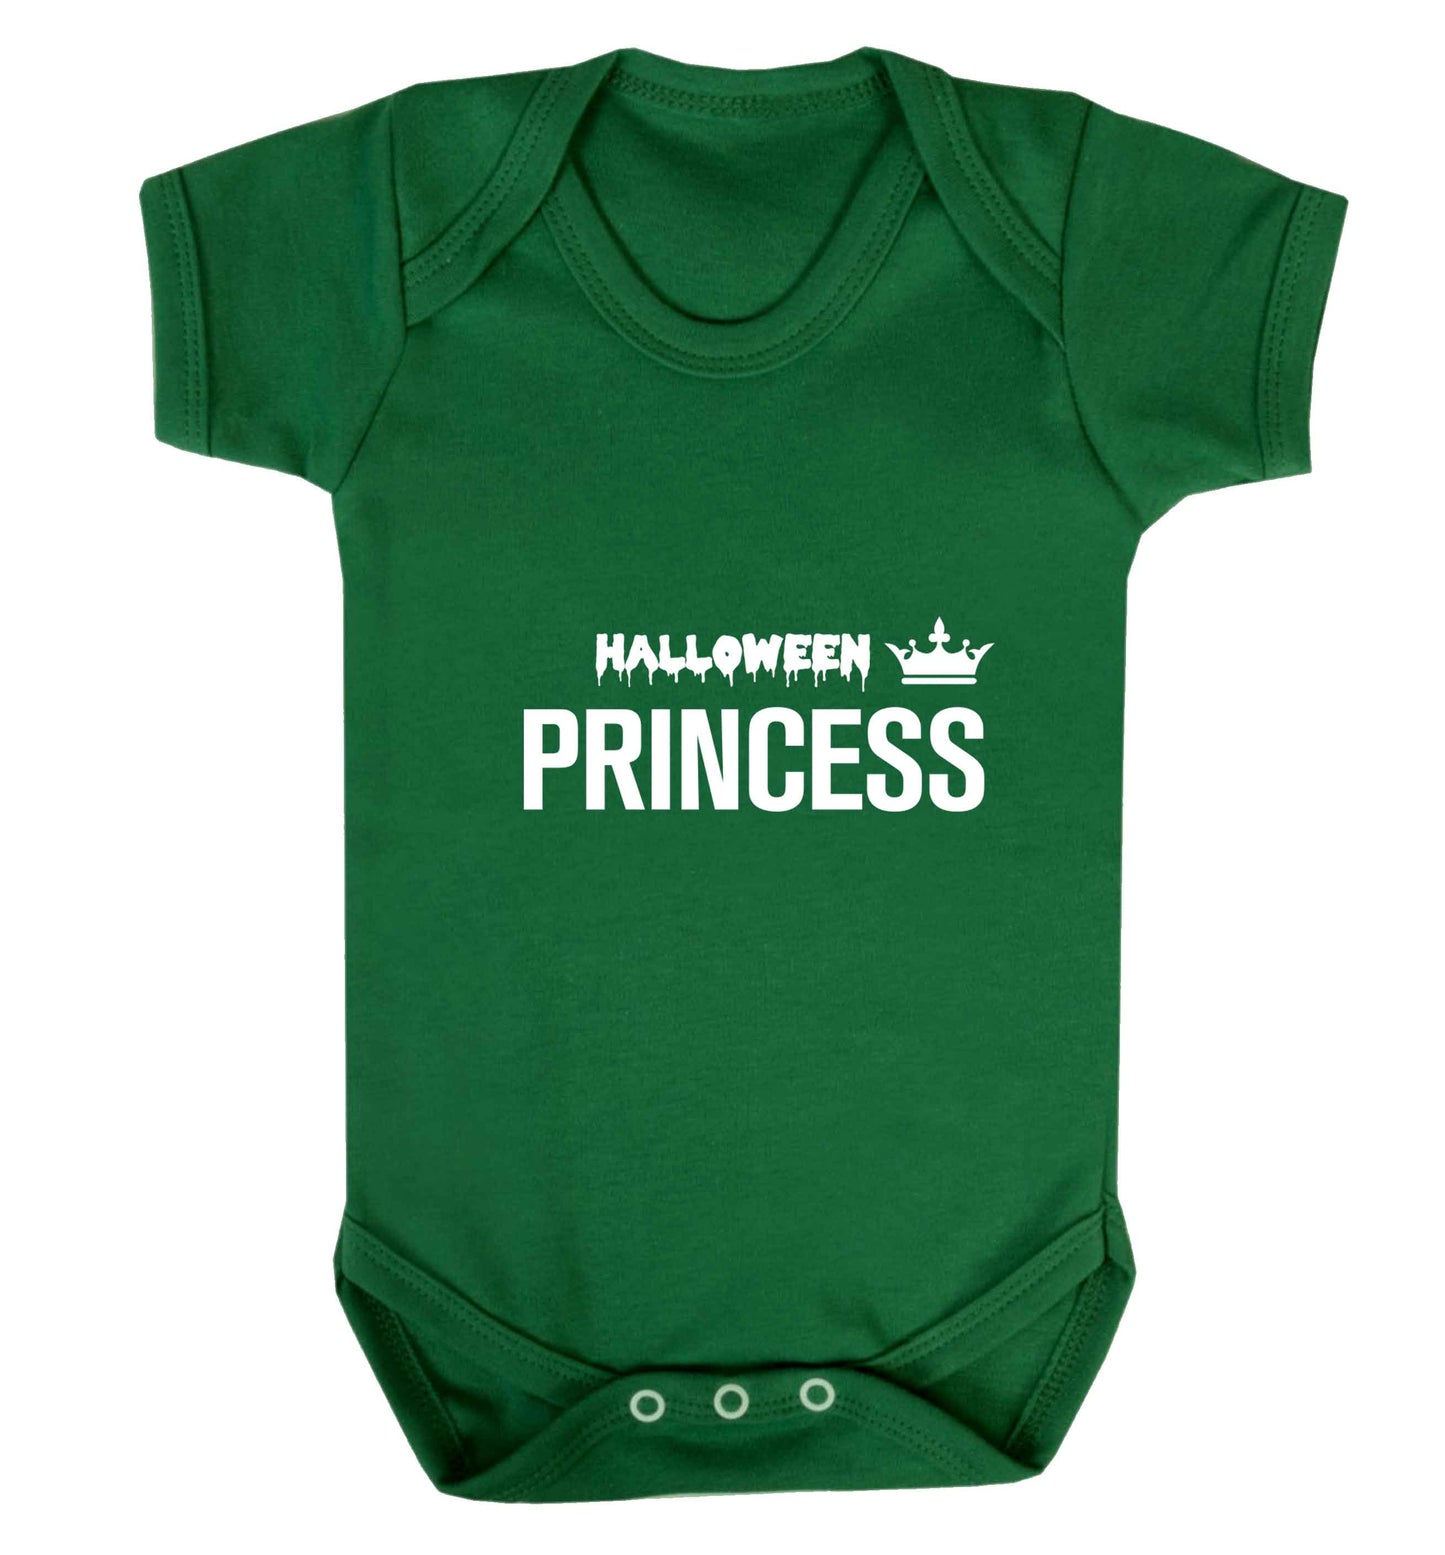 Halloween princess baby vest green 18-24 months